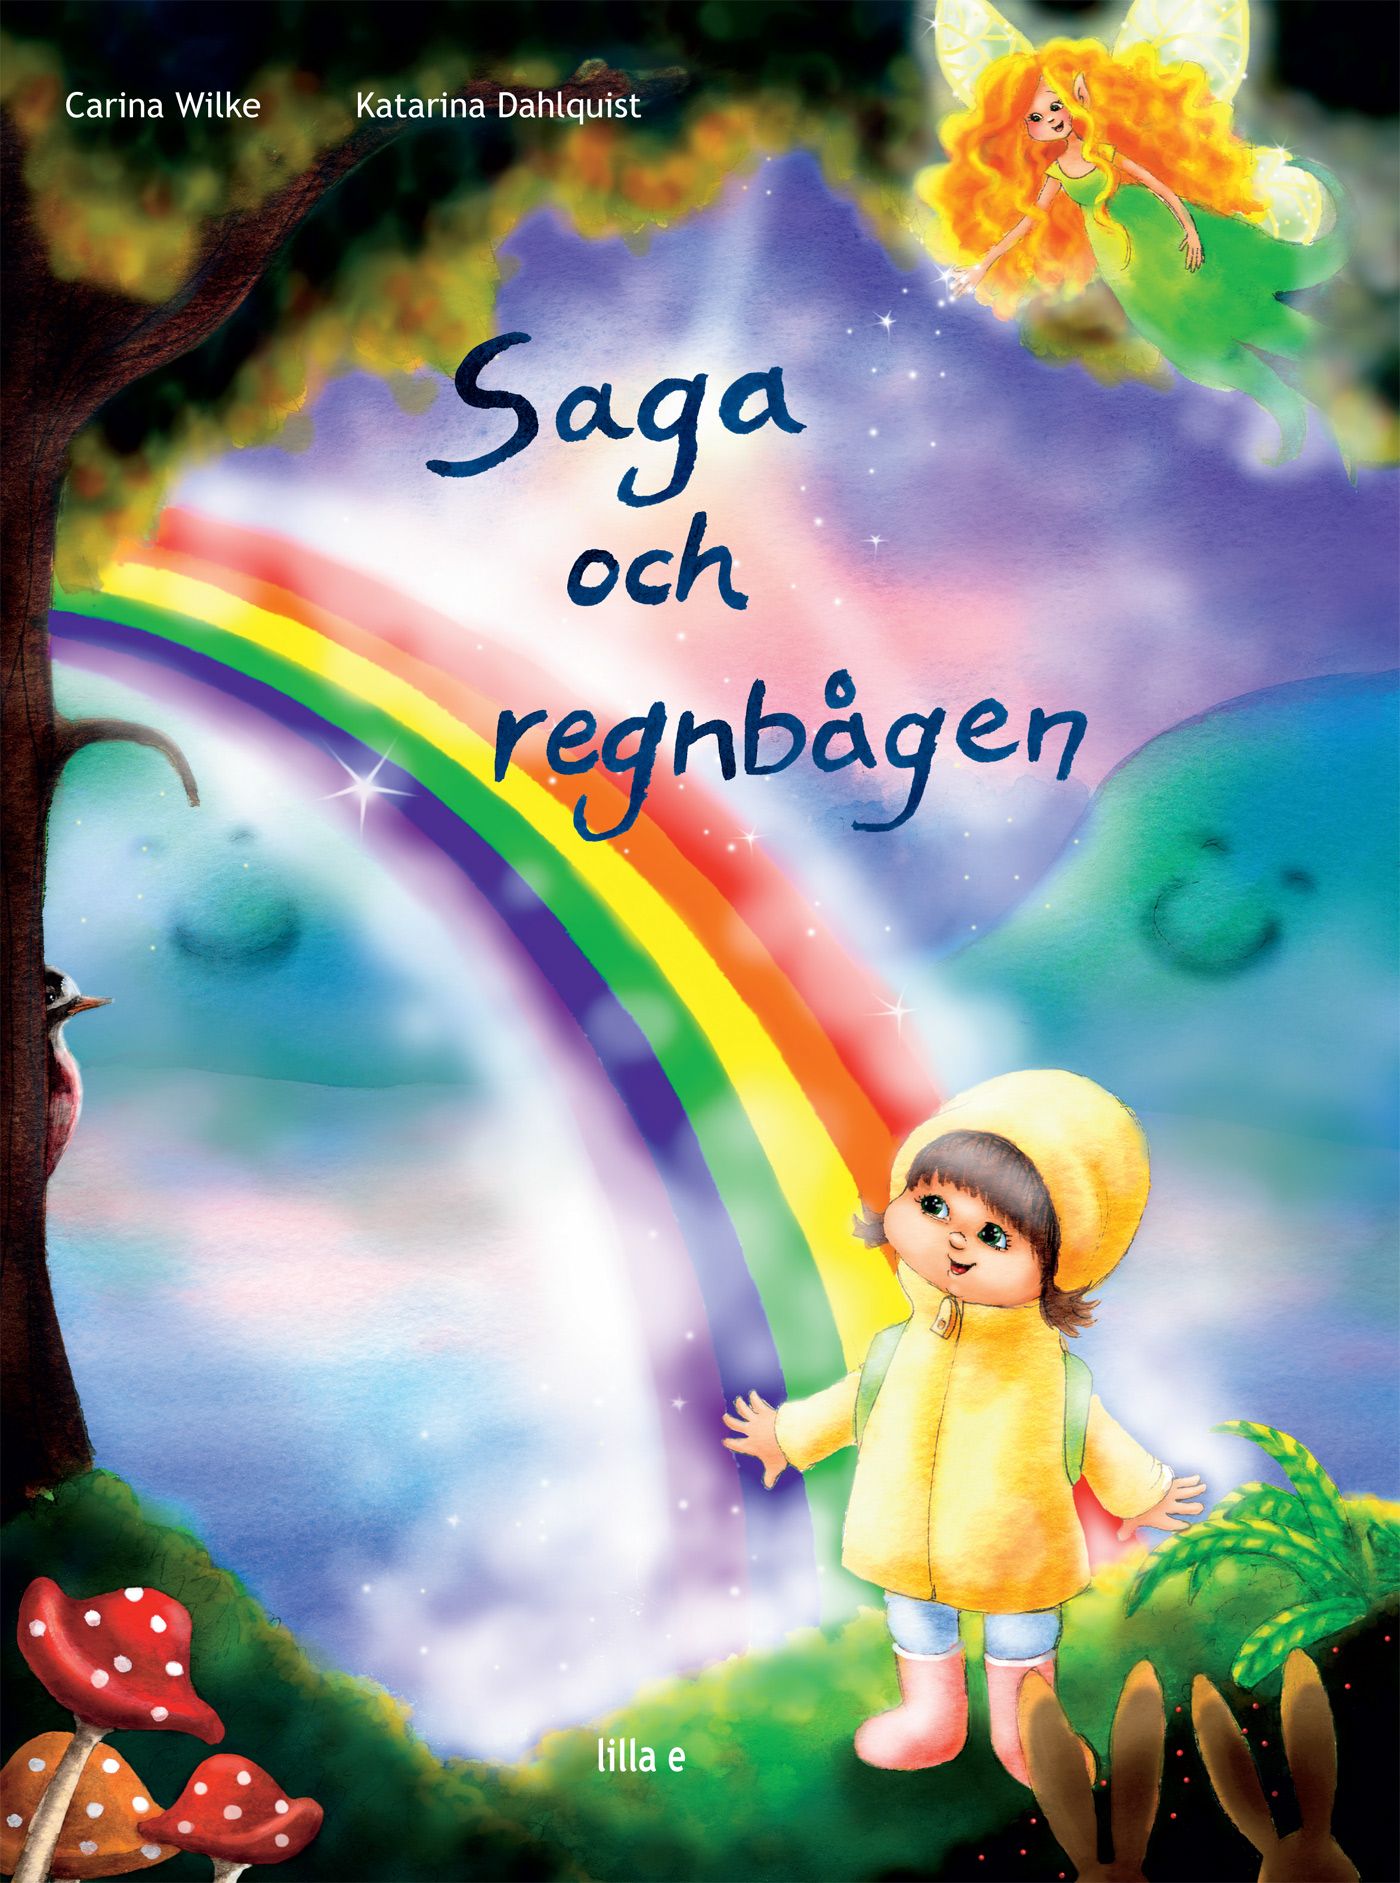 Saga och Regnbågen, eBook by Carina Wilke